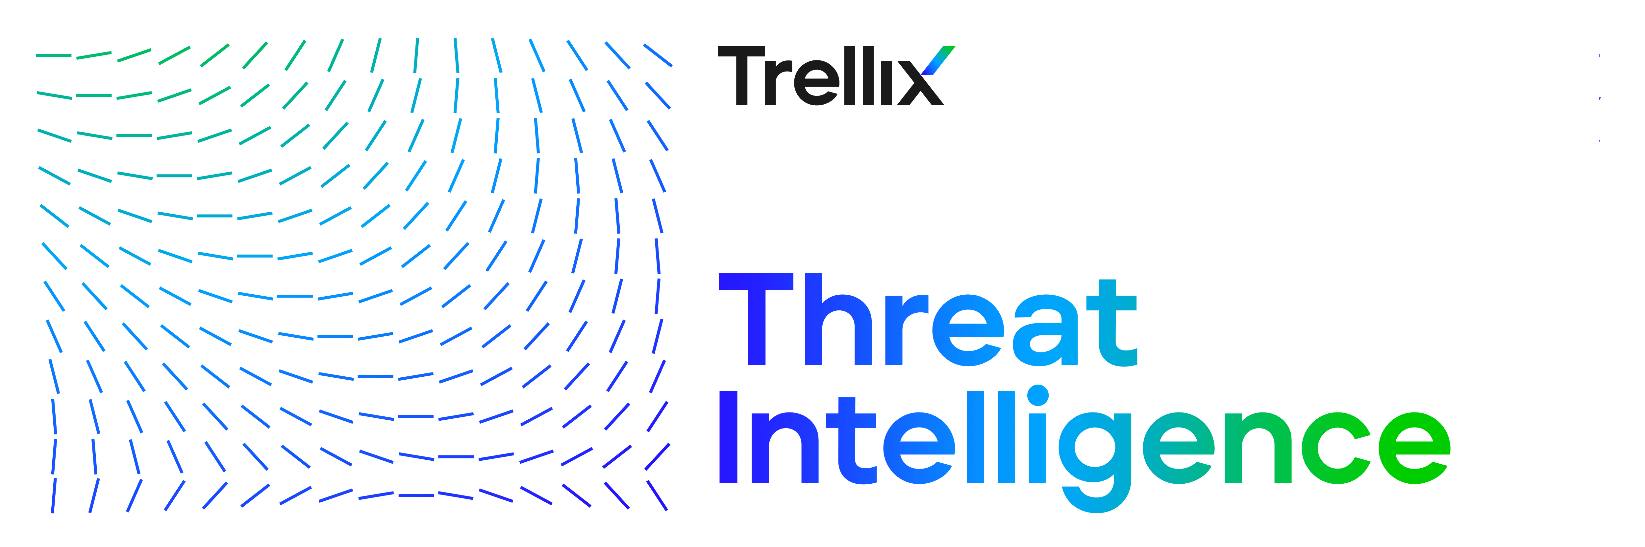 Trellix Threat Intelligence banner